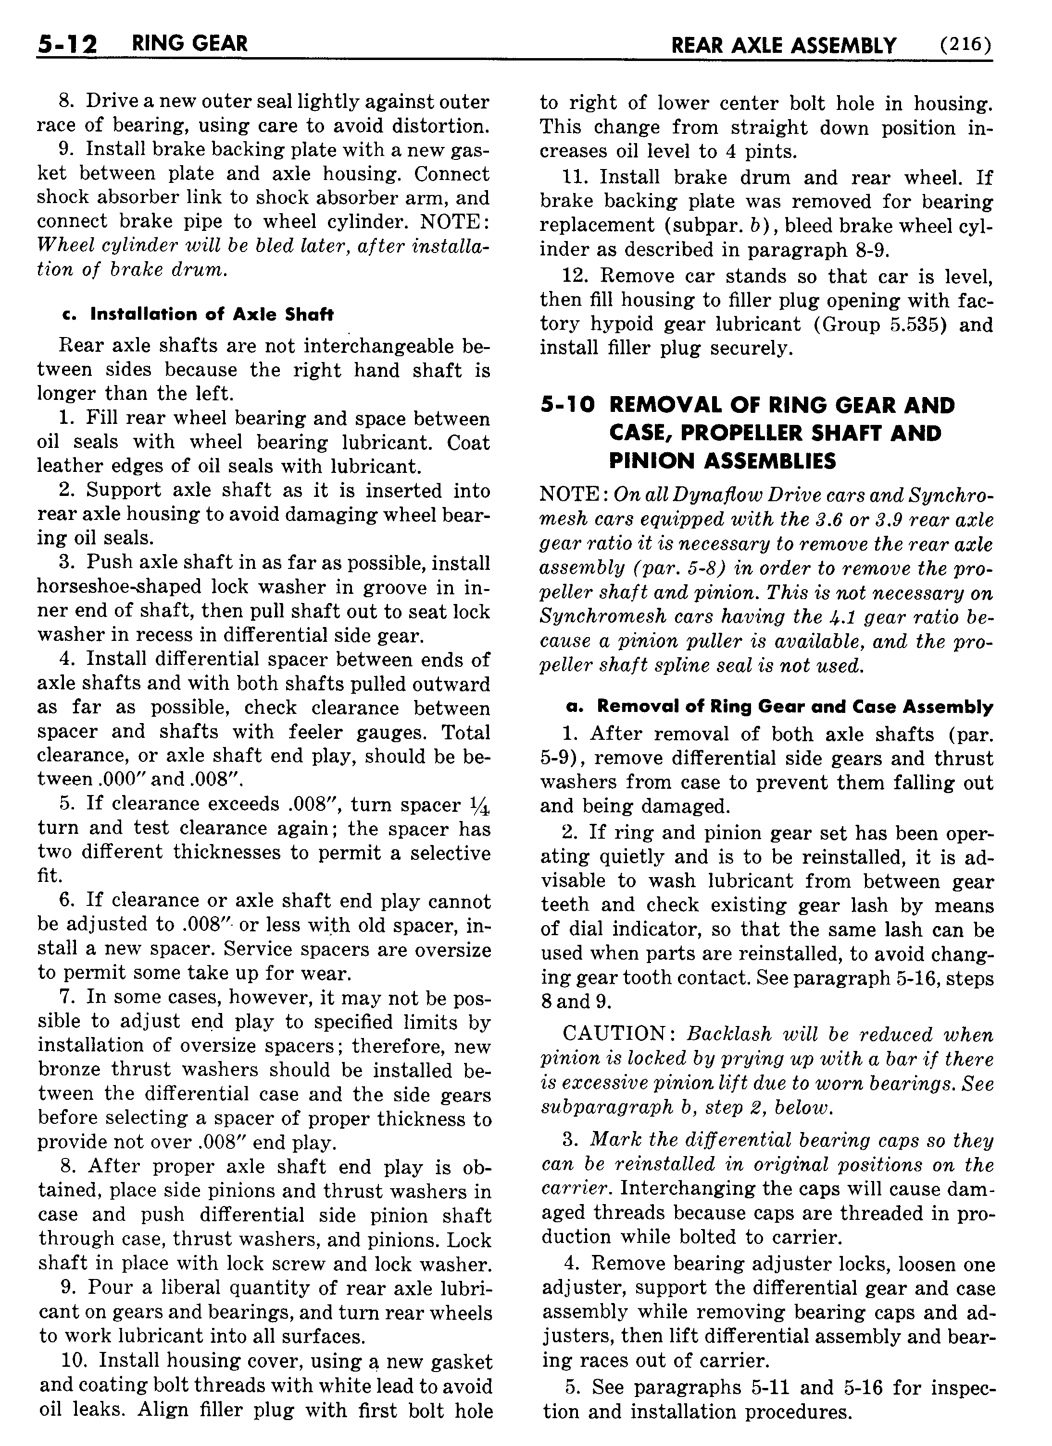 n_06 1951 Buick Shop Manual - Rear Axle-012-012.jpg